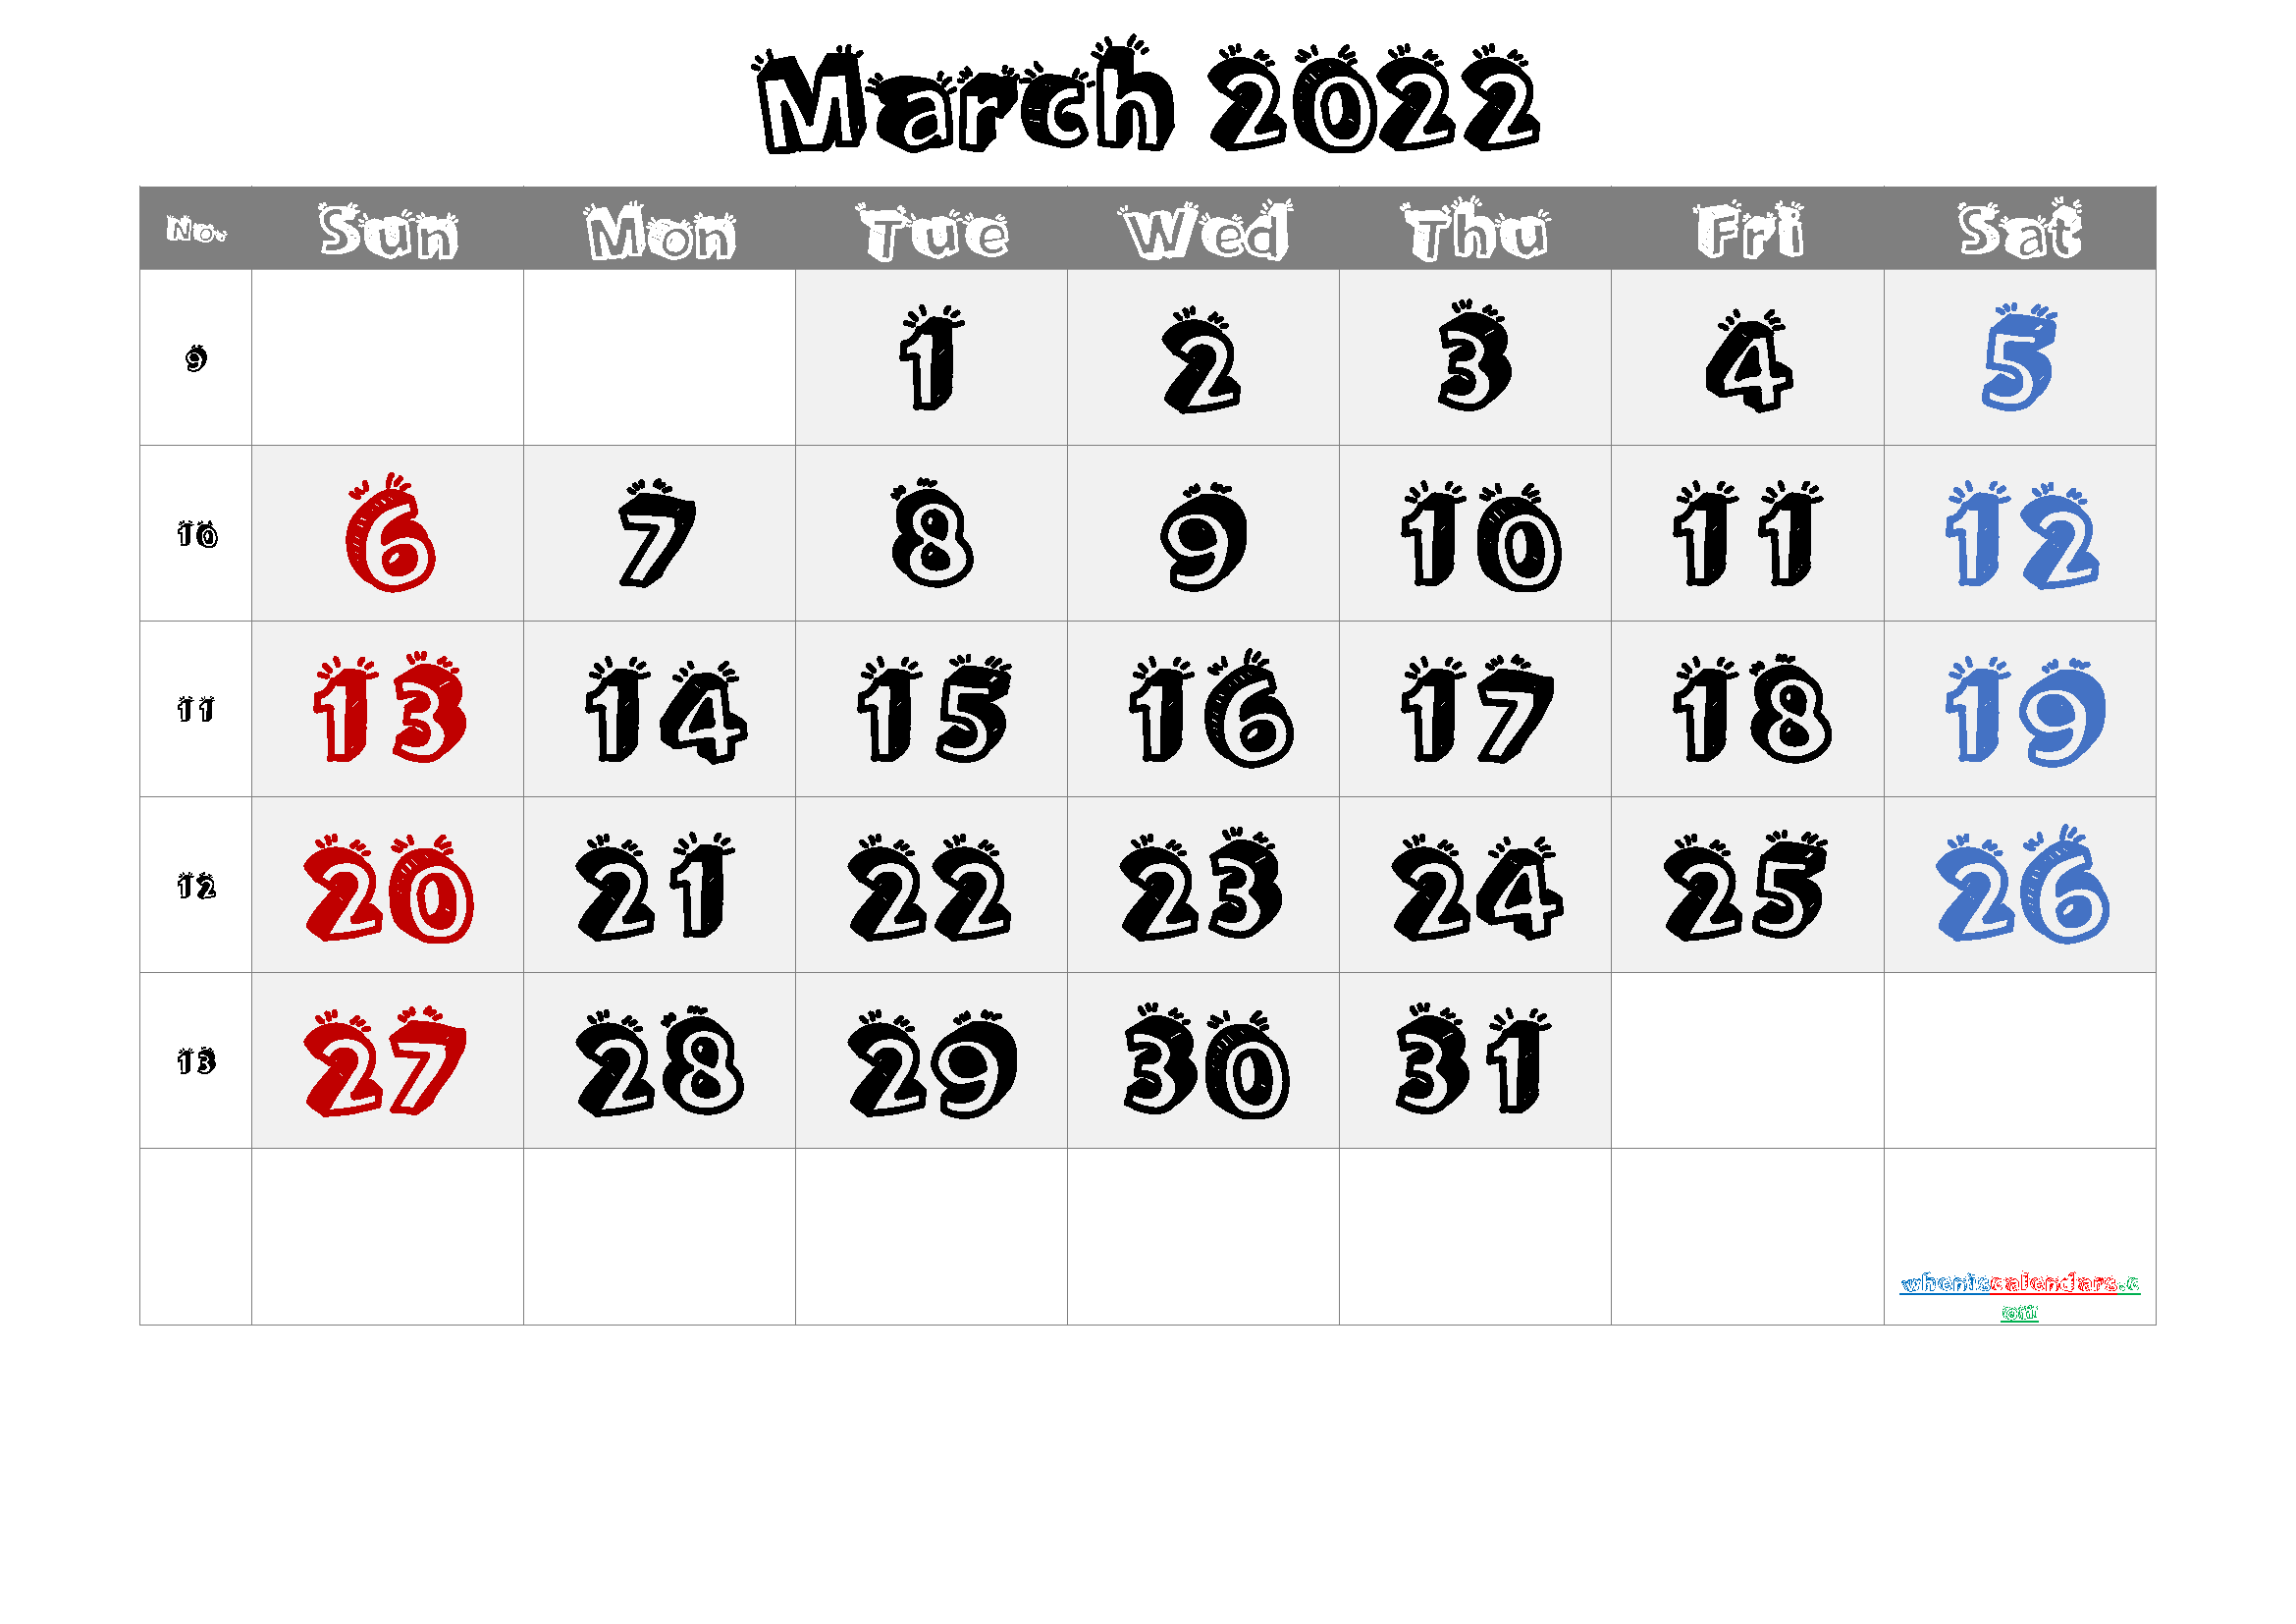 March 2022 Printable Calendar with Week Numbers